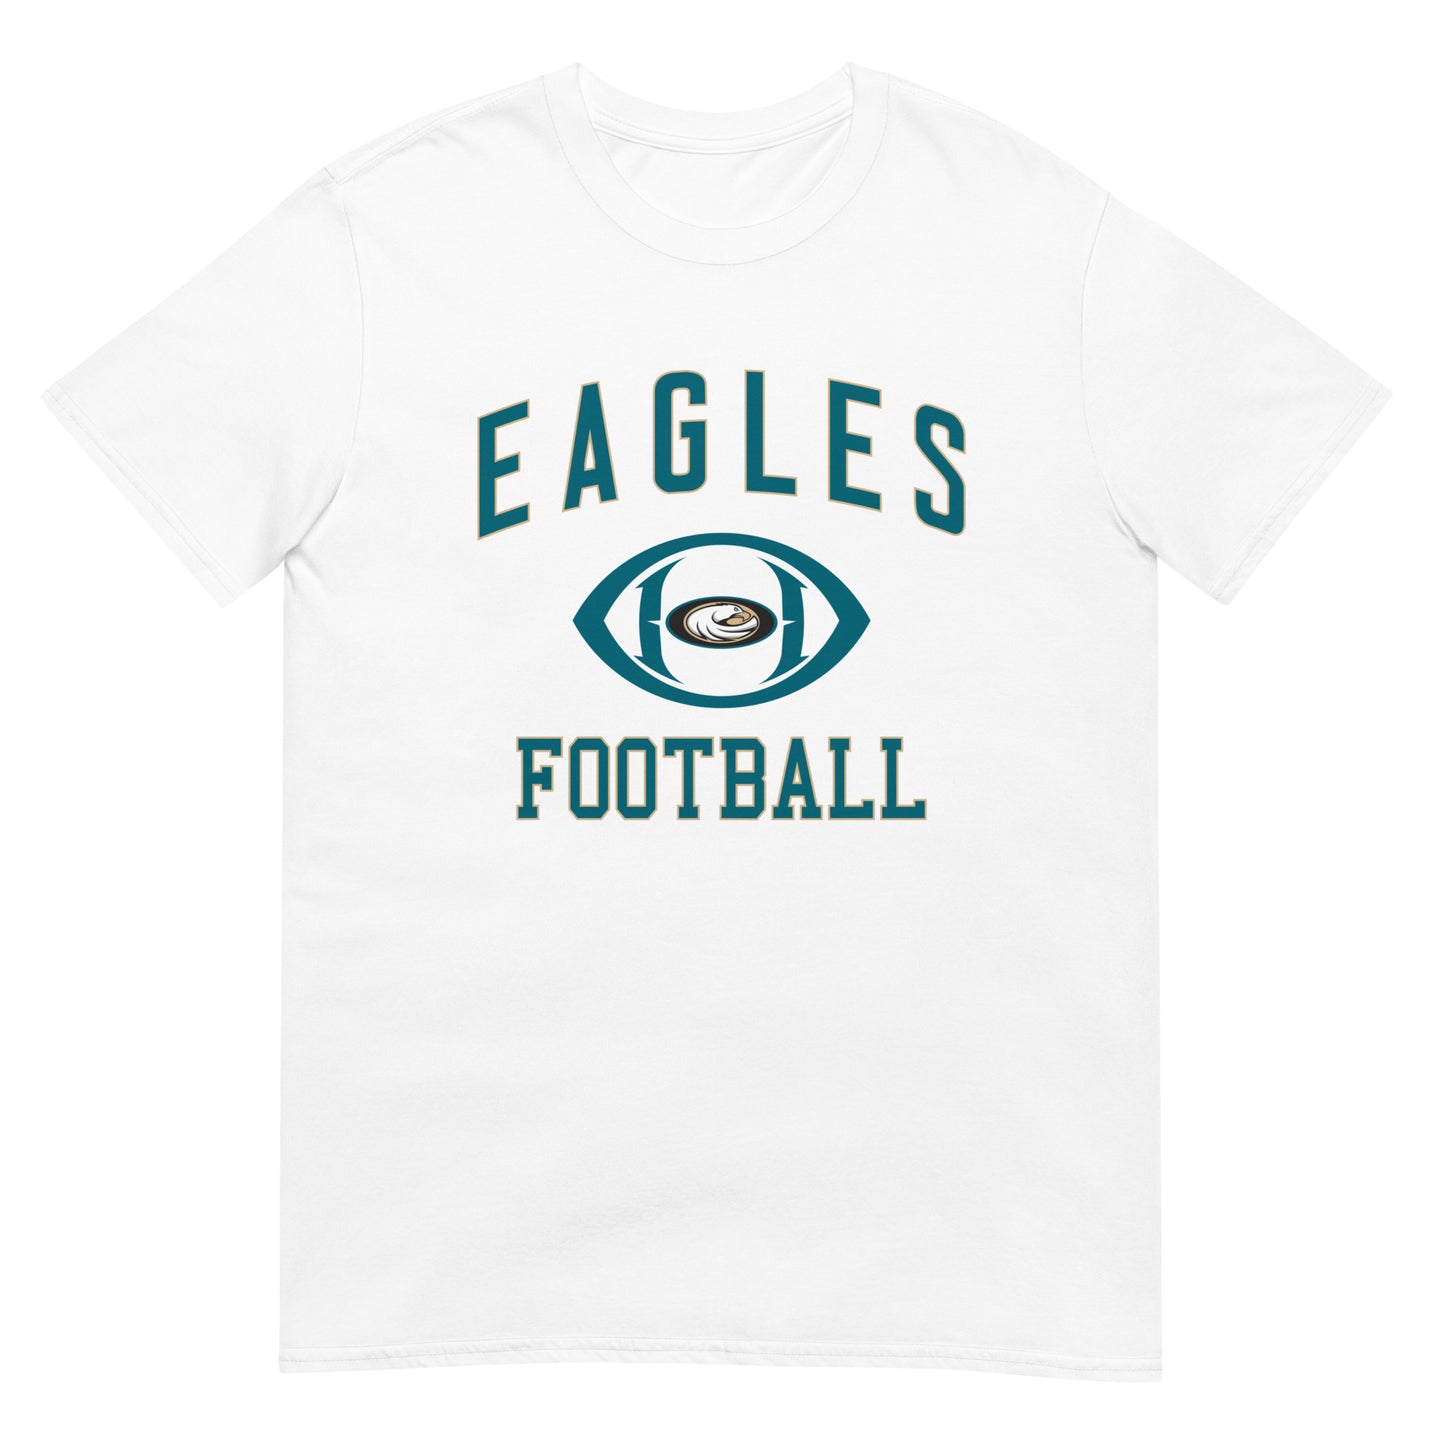 Eagles Football Short-Sleeve Unisex T-Shirt